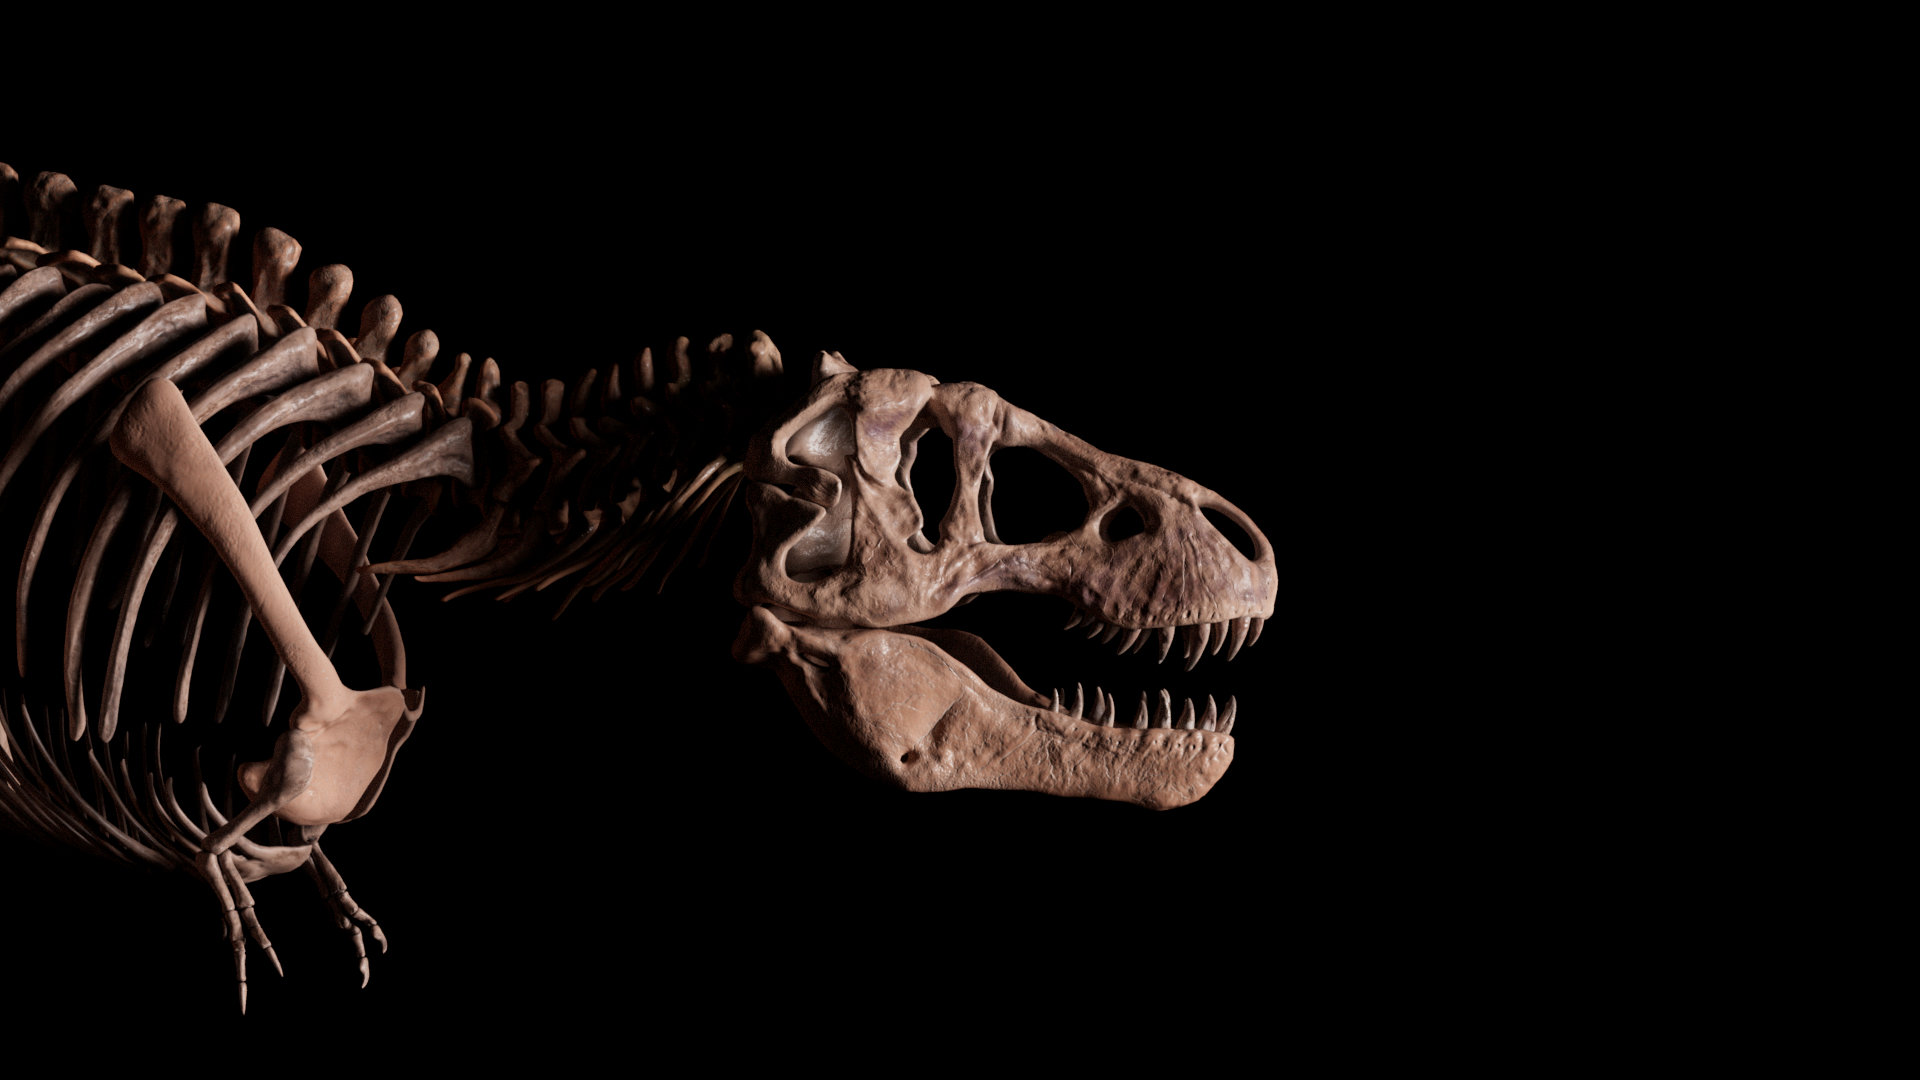 Tyrannosaurus rex side view, skull and ribs